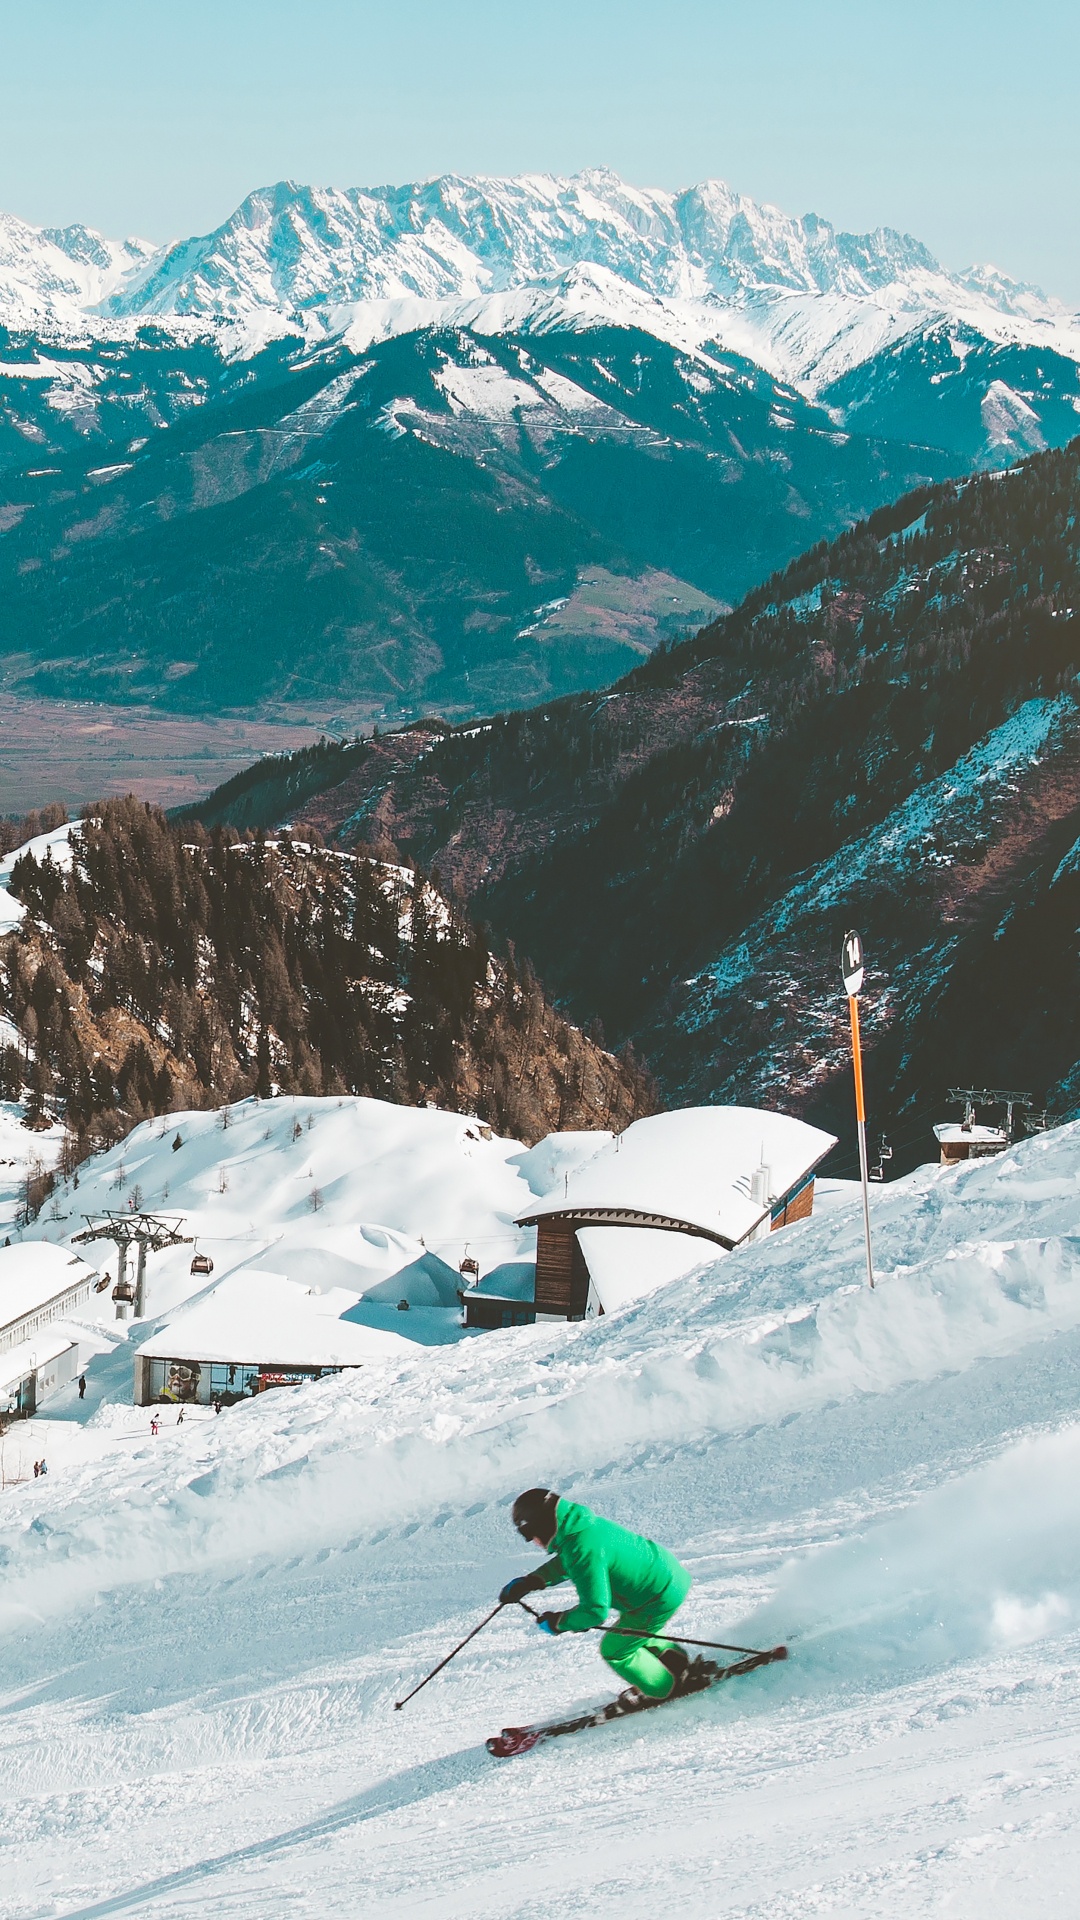 Station de Ski, Ski, Resort, Neige, Les Reliefs Montagneux. Wallpaper in 1080x1920 Resolution